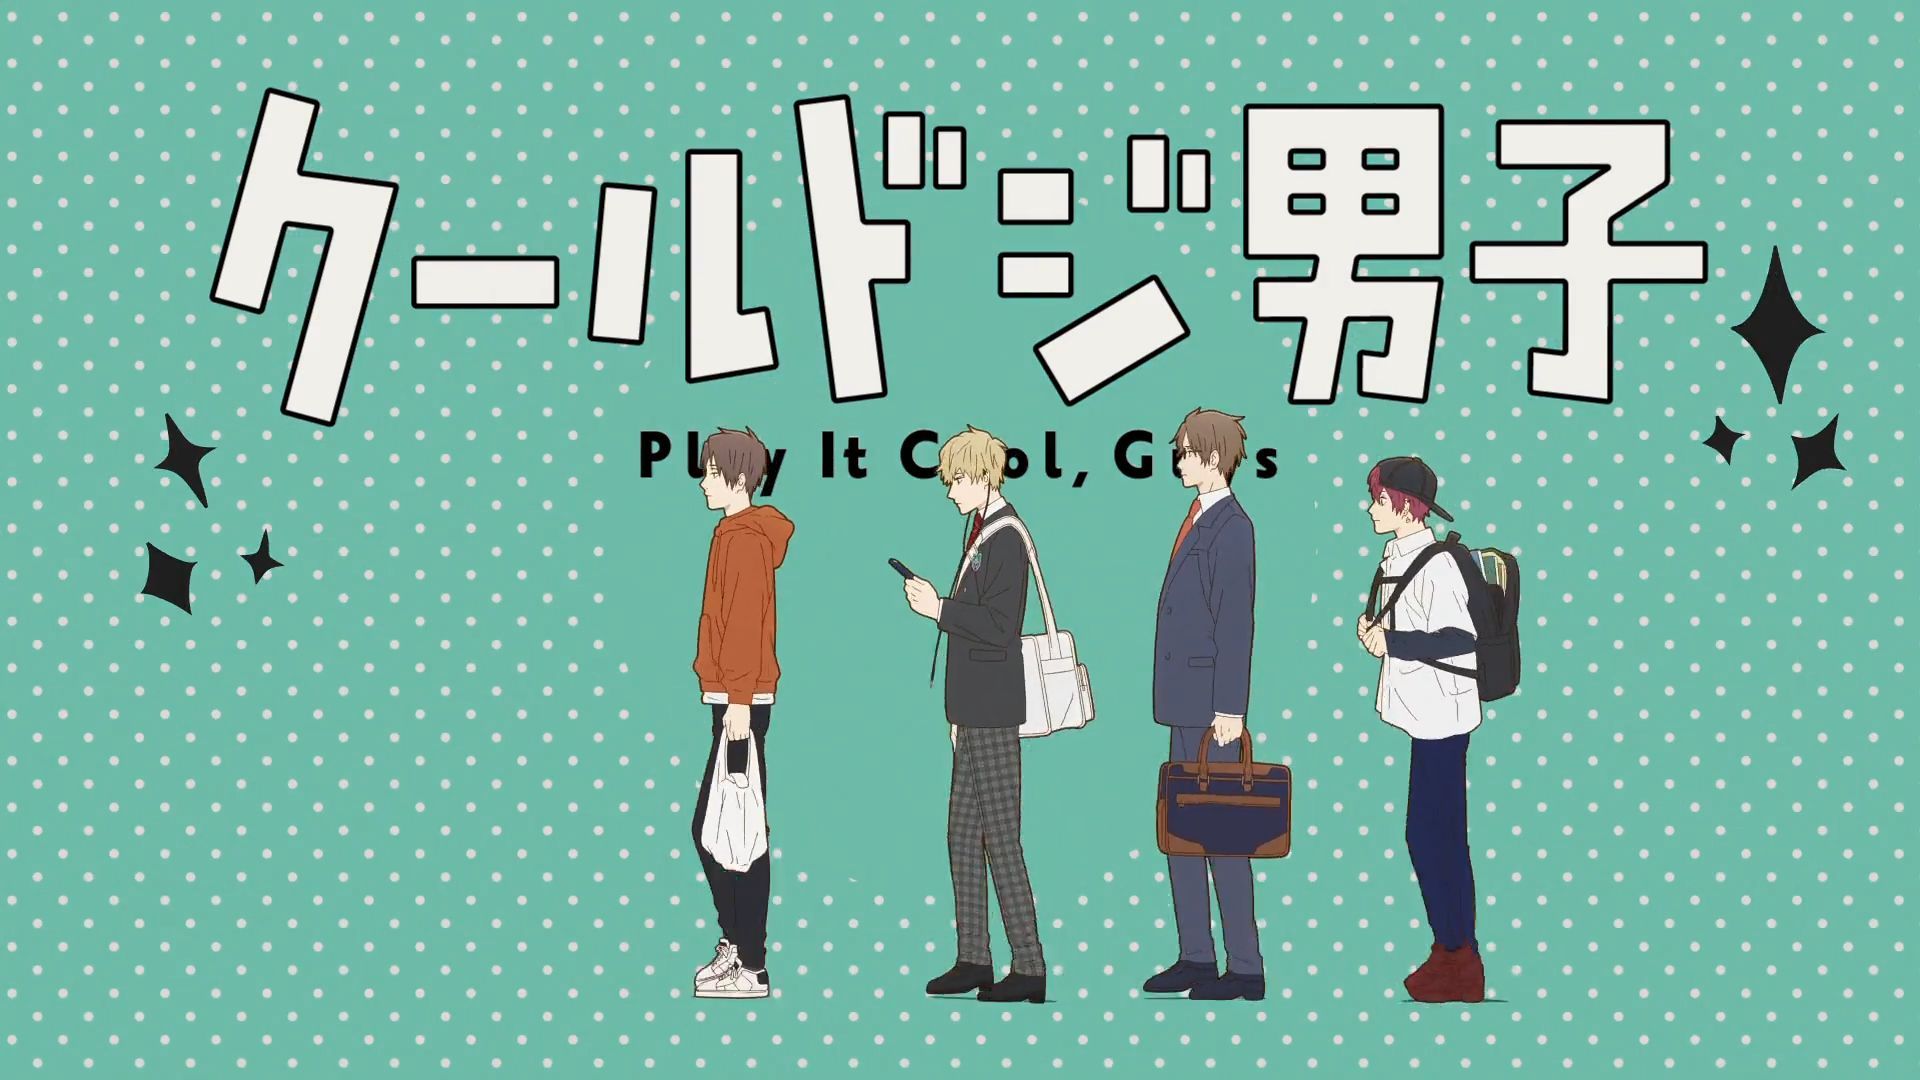 Cool Doji Danshi (Play It Cool, Guys) Boys Love - BL Anime